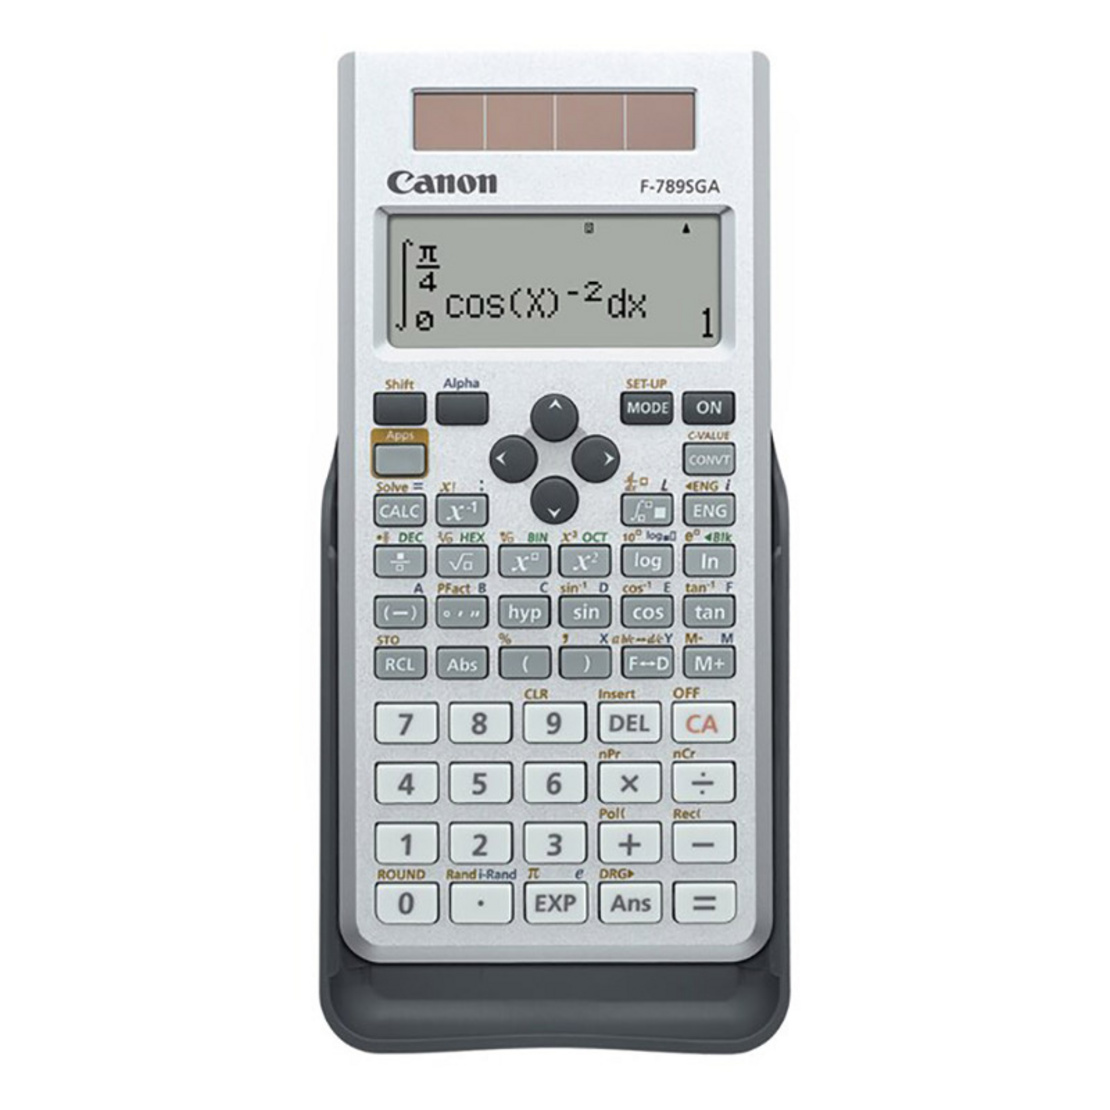 scientific calculator f to d